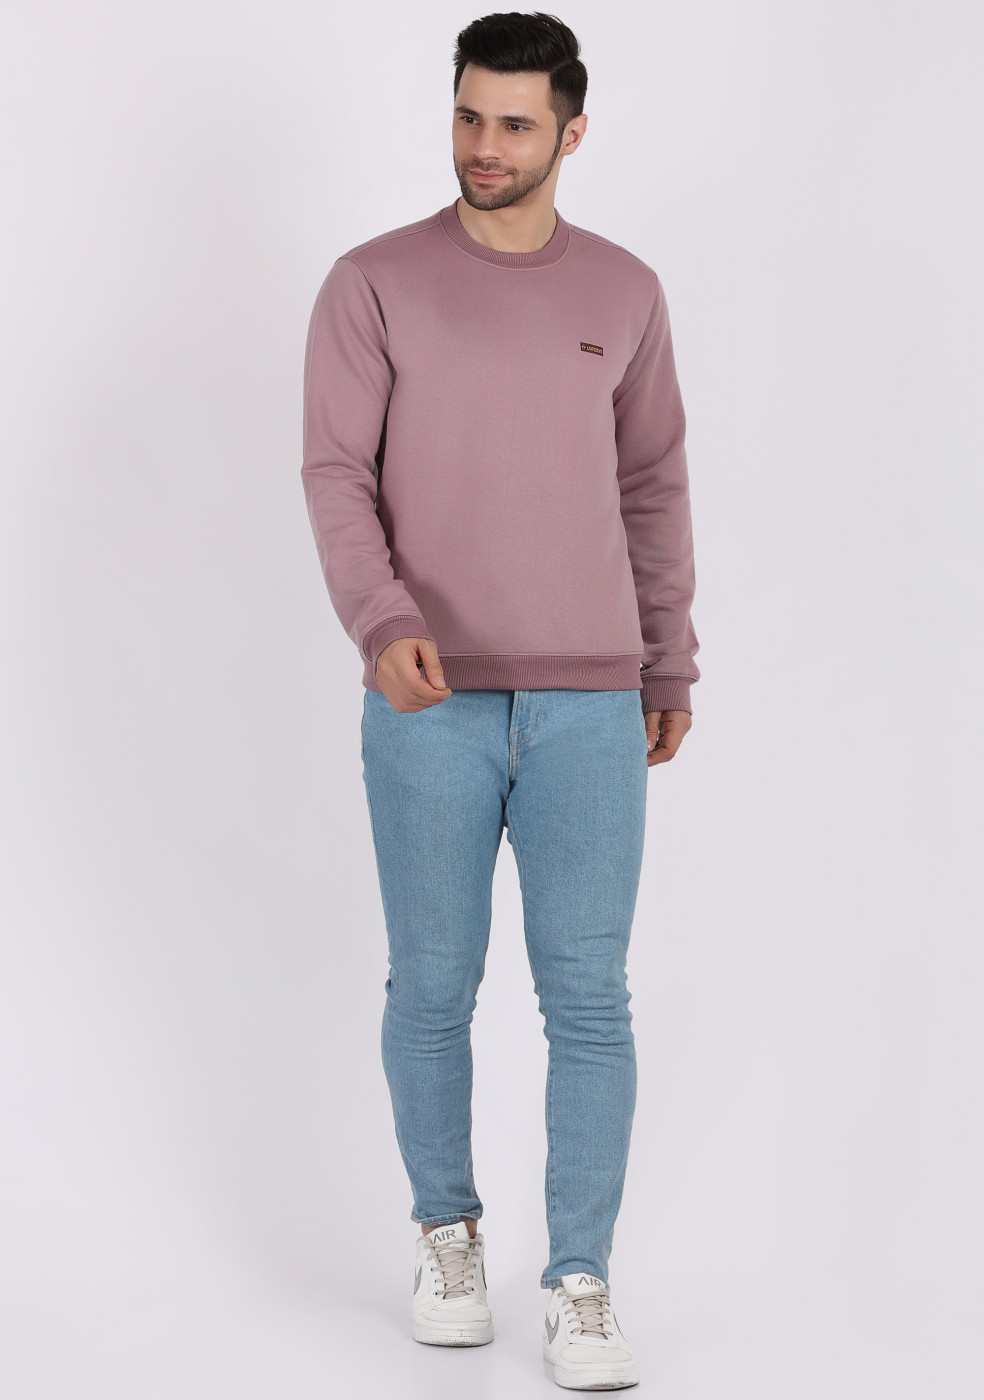 HUKH Onion Color Sweatshirt For Men